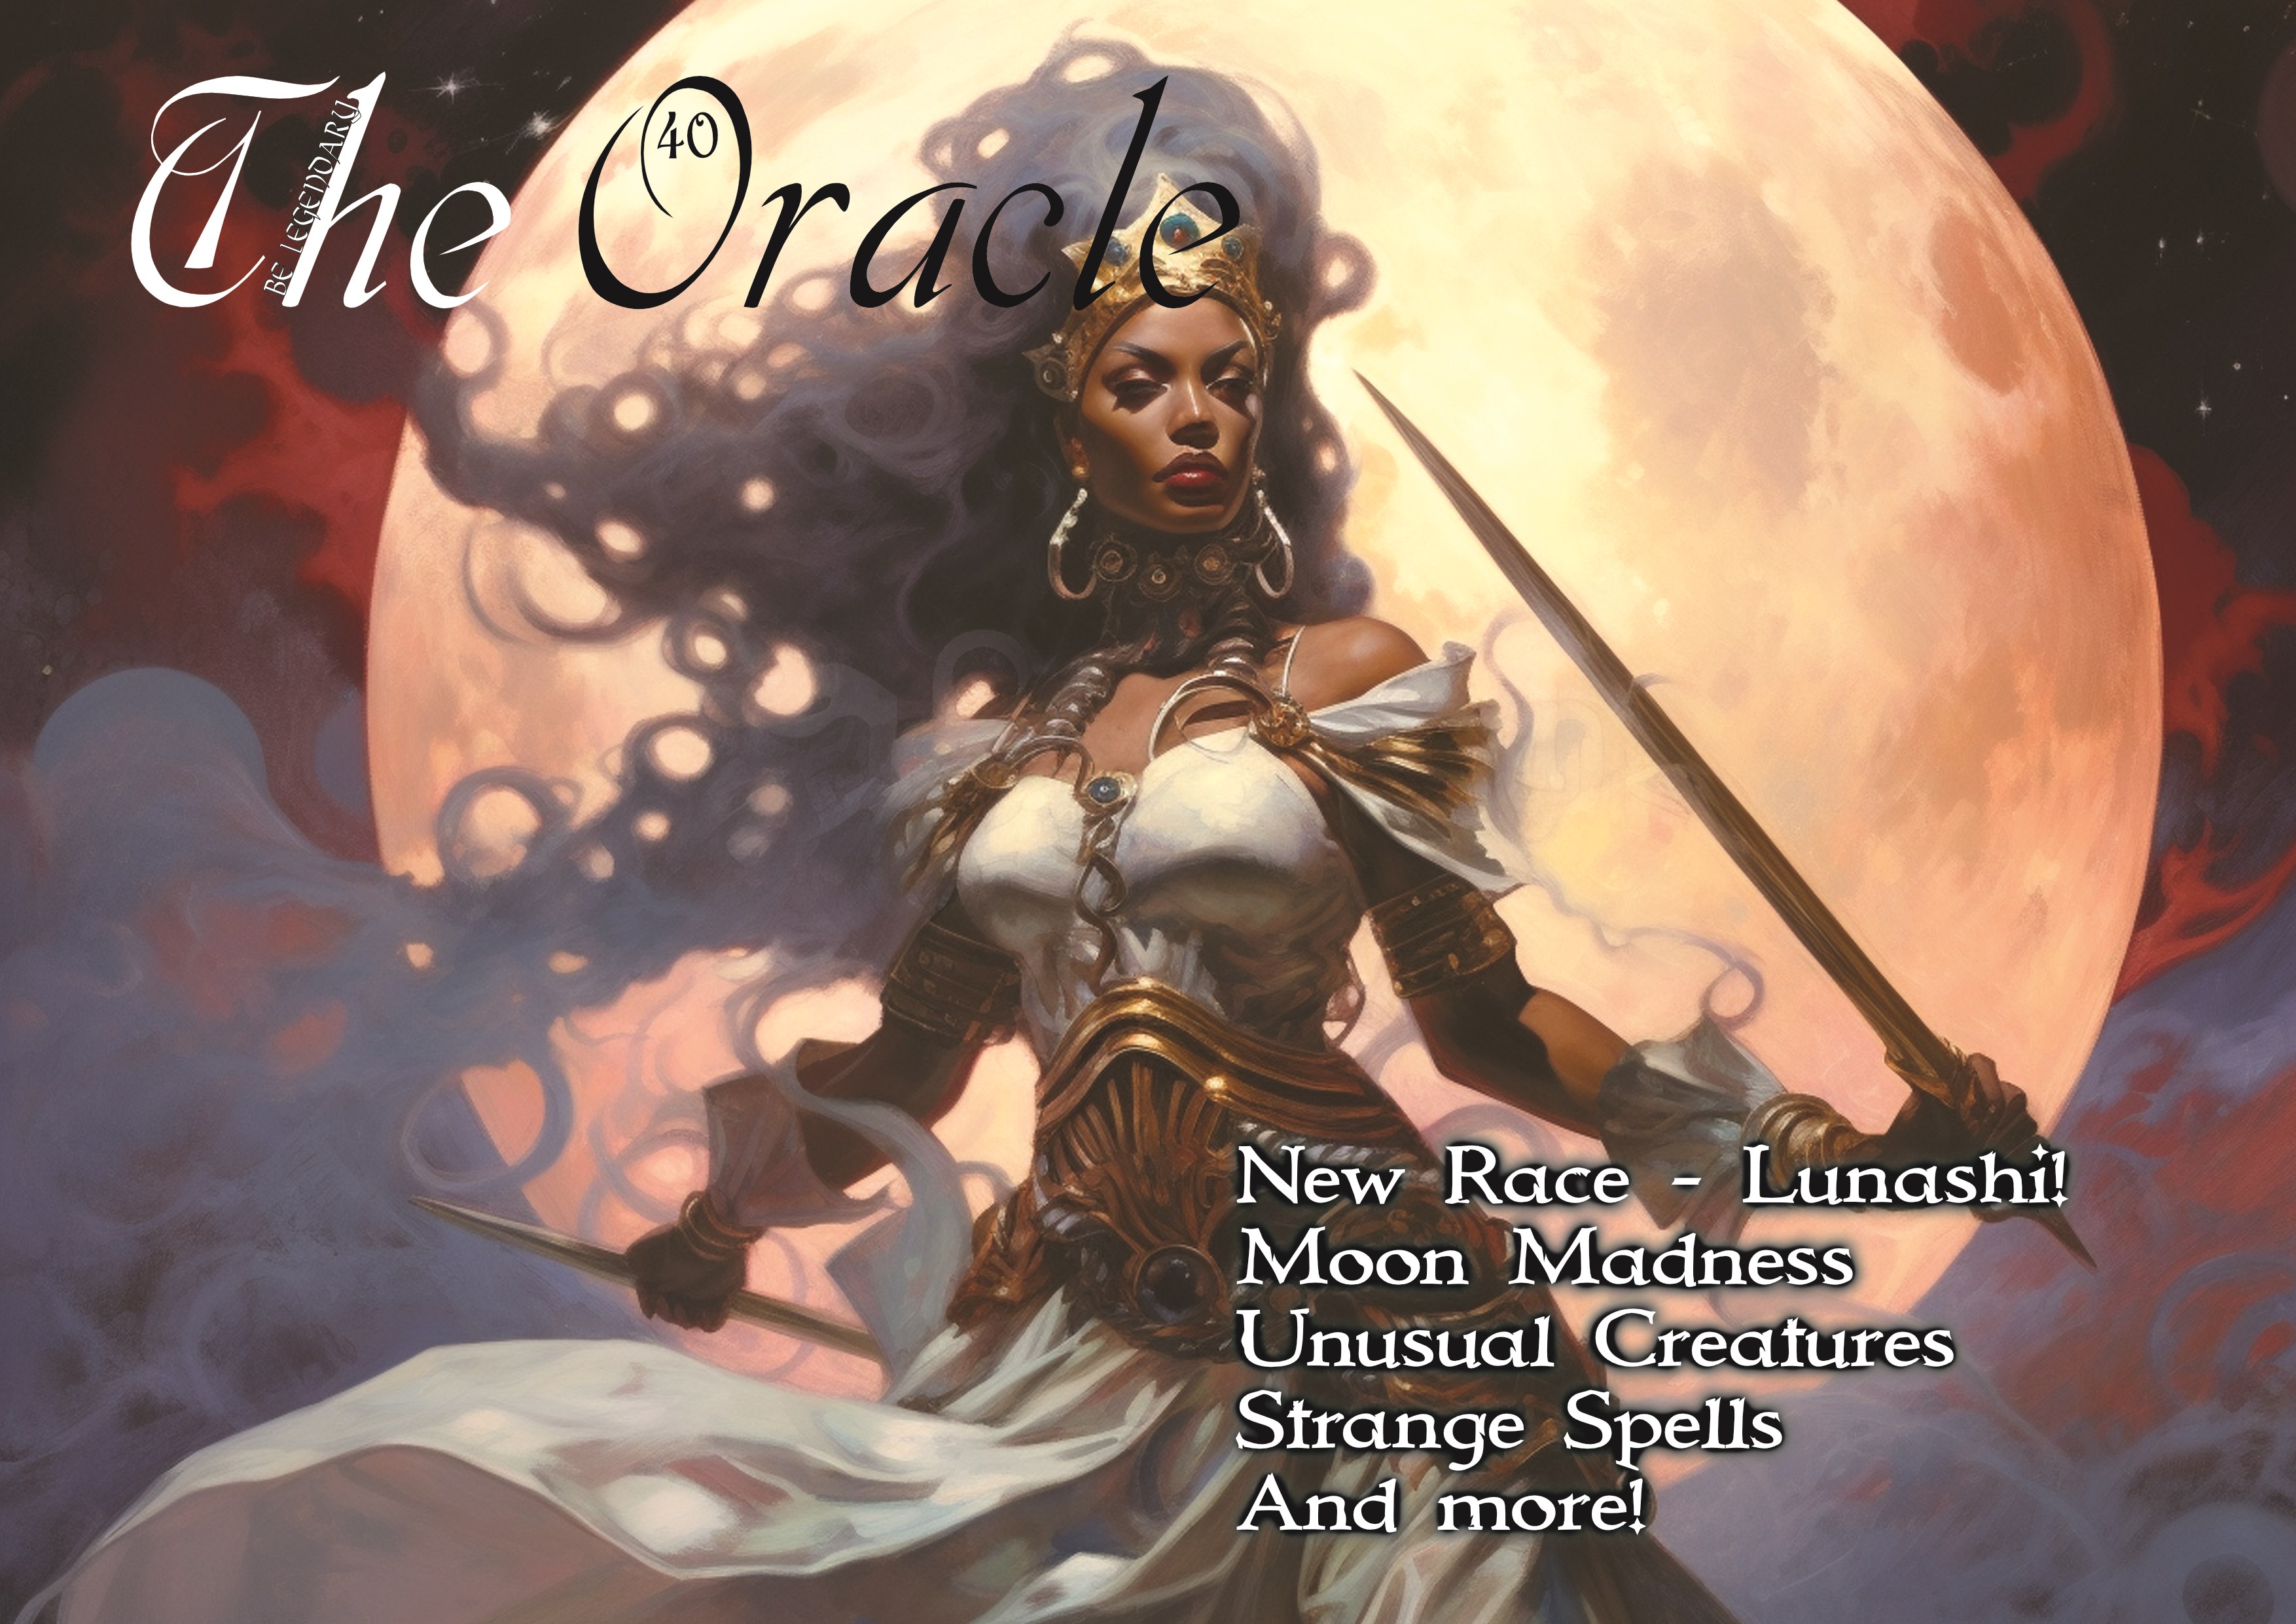 The_Oracle_40 Moon Magic Cover.jpg